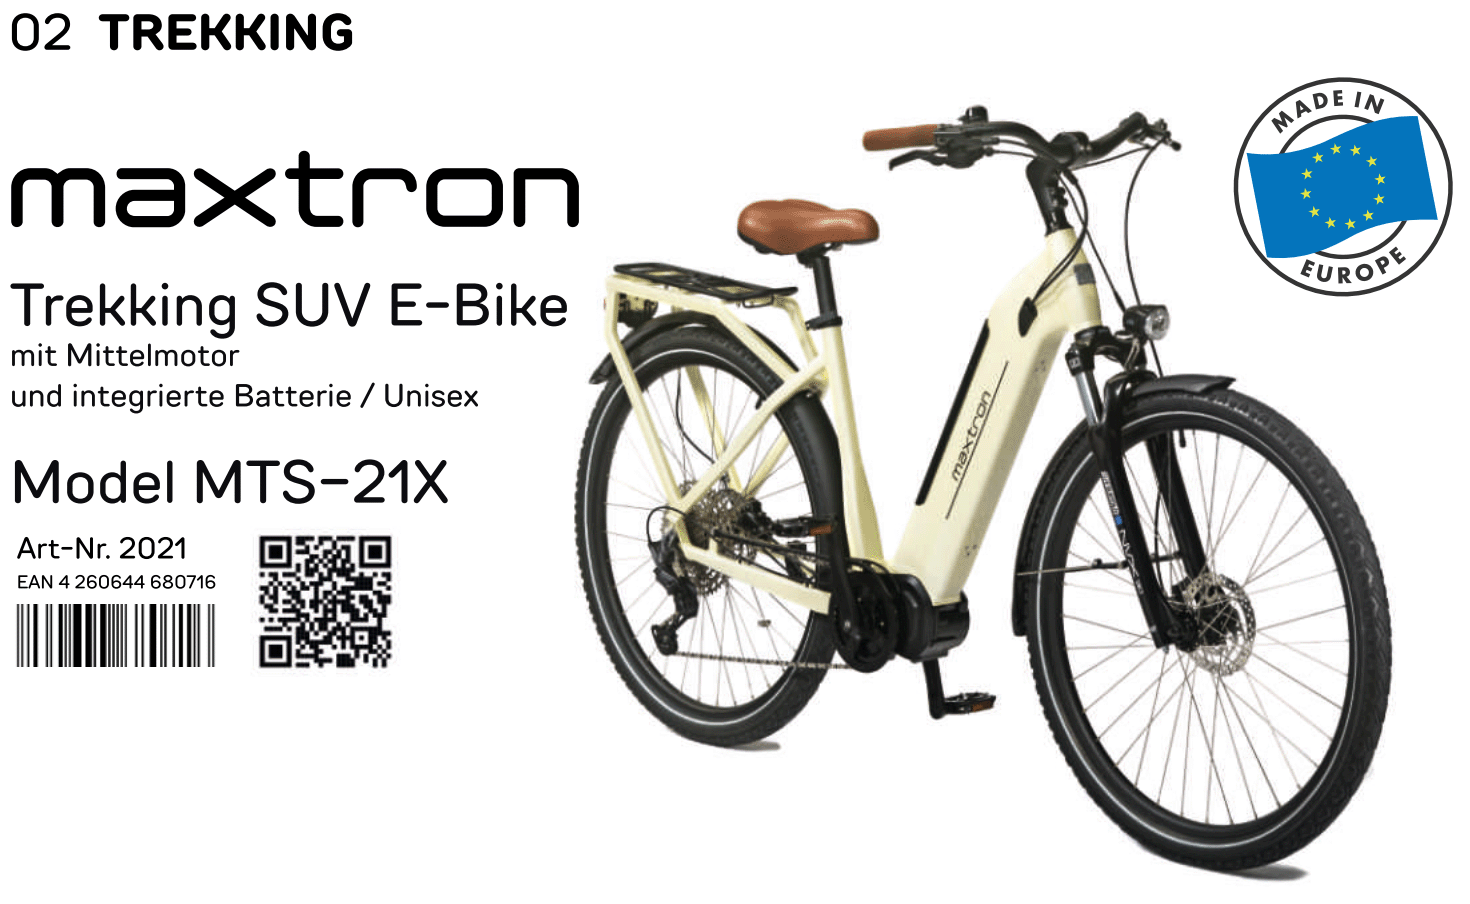 Trekking - Maxtron Bikes Bikes